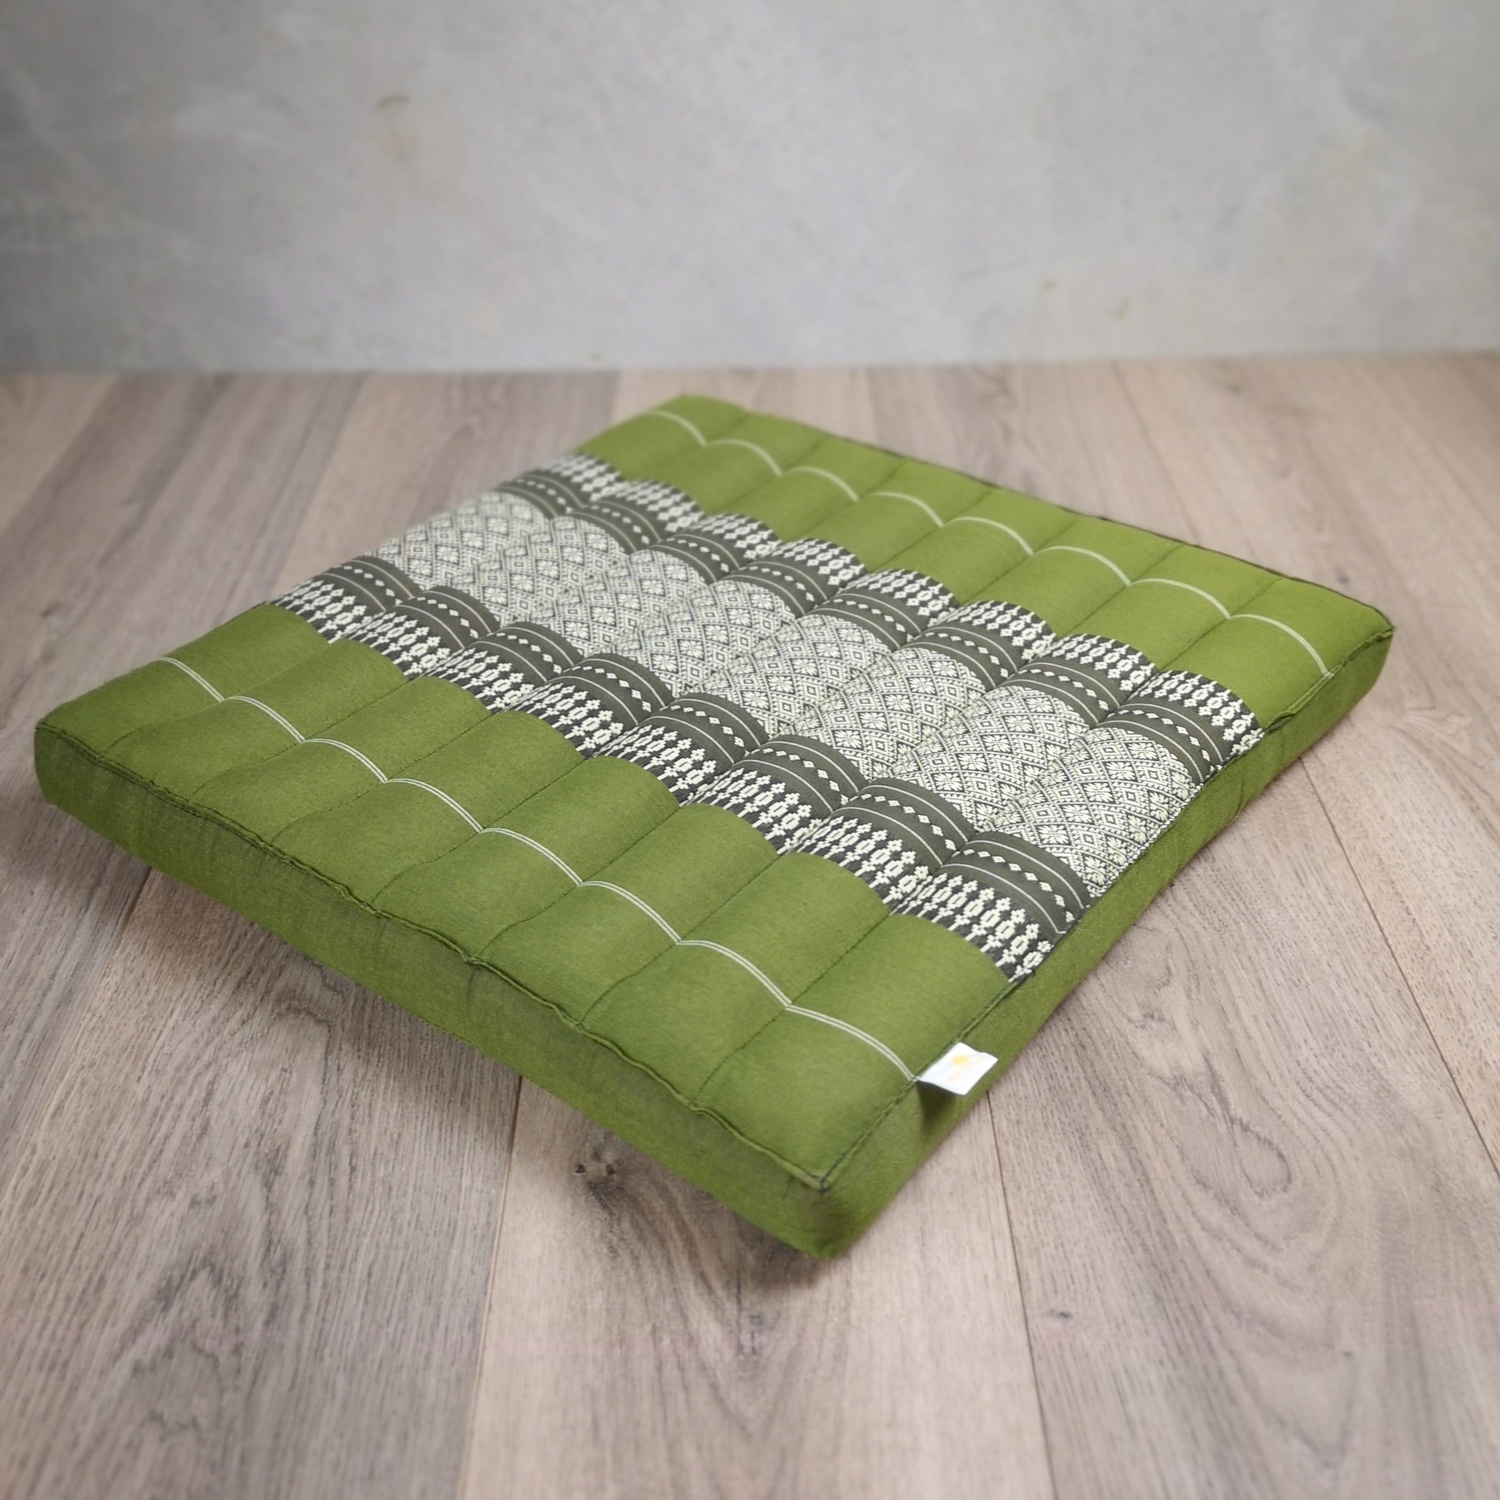 [MANGO TREES] Zafu Meditation Cushion Floor Seat Matt Organic Kapok Filled